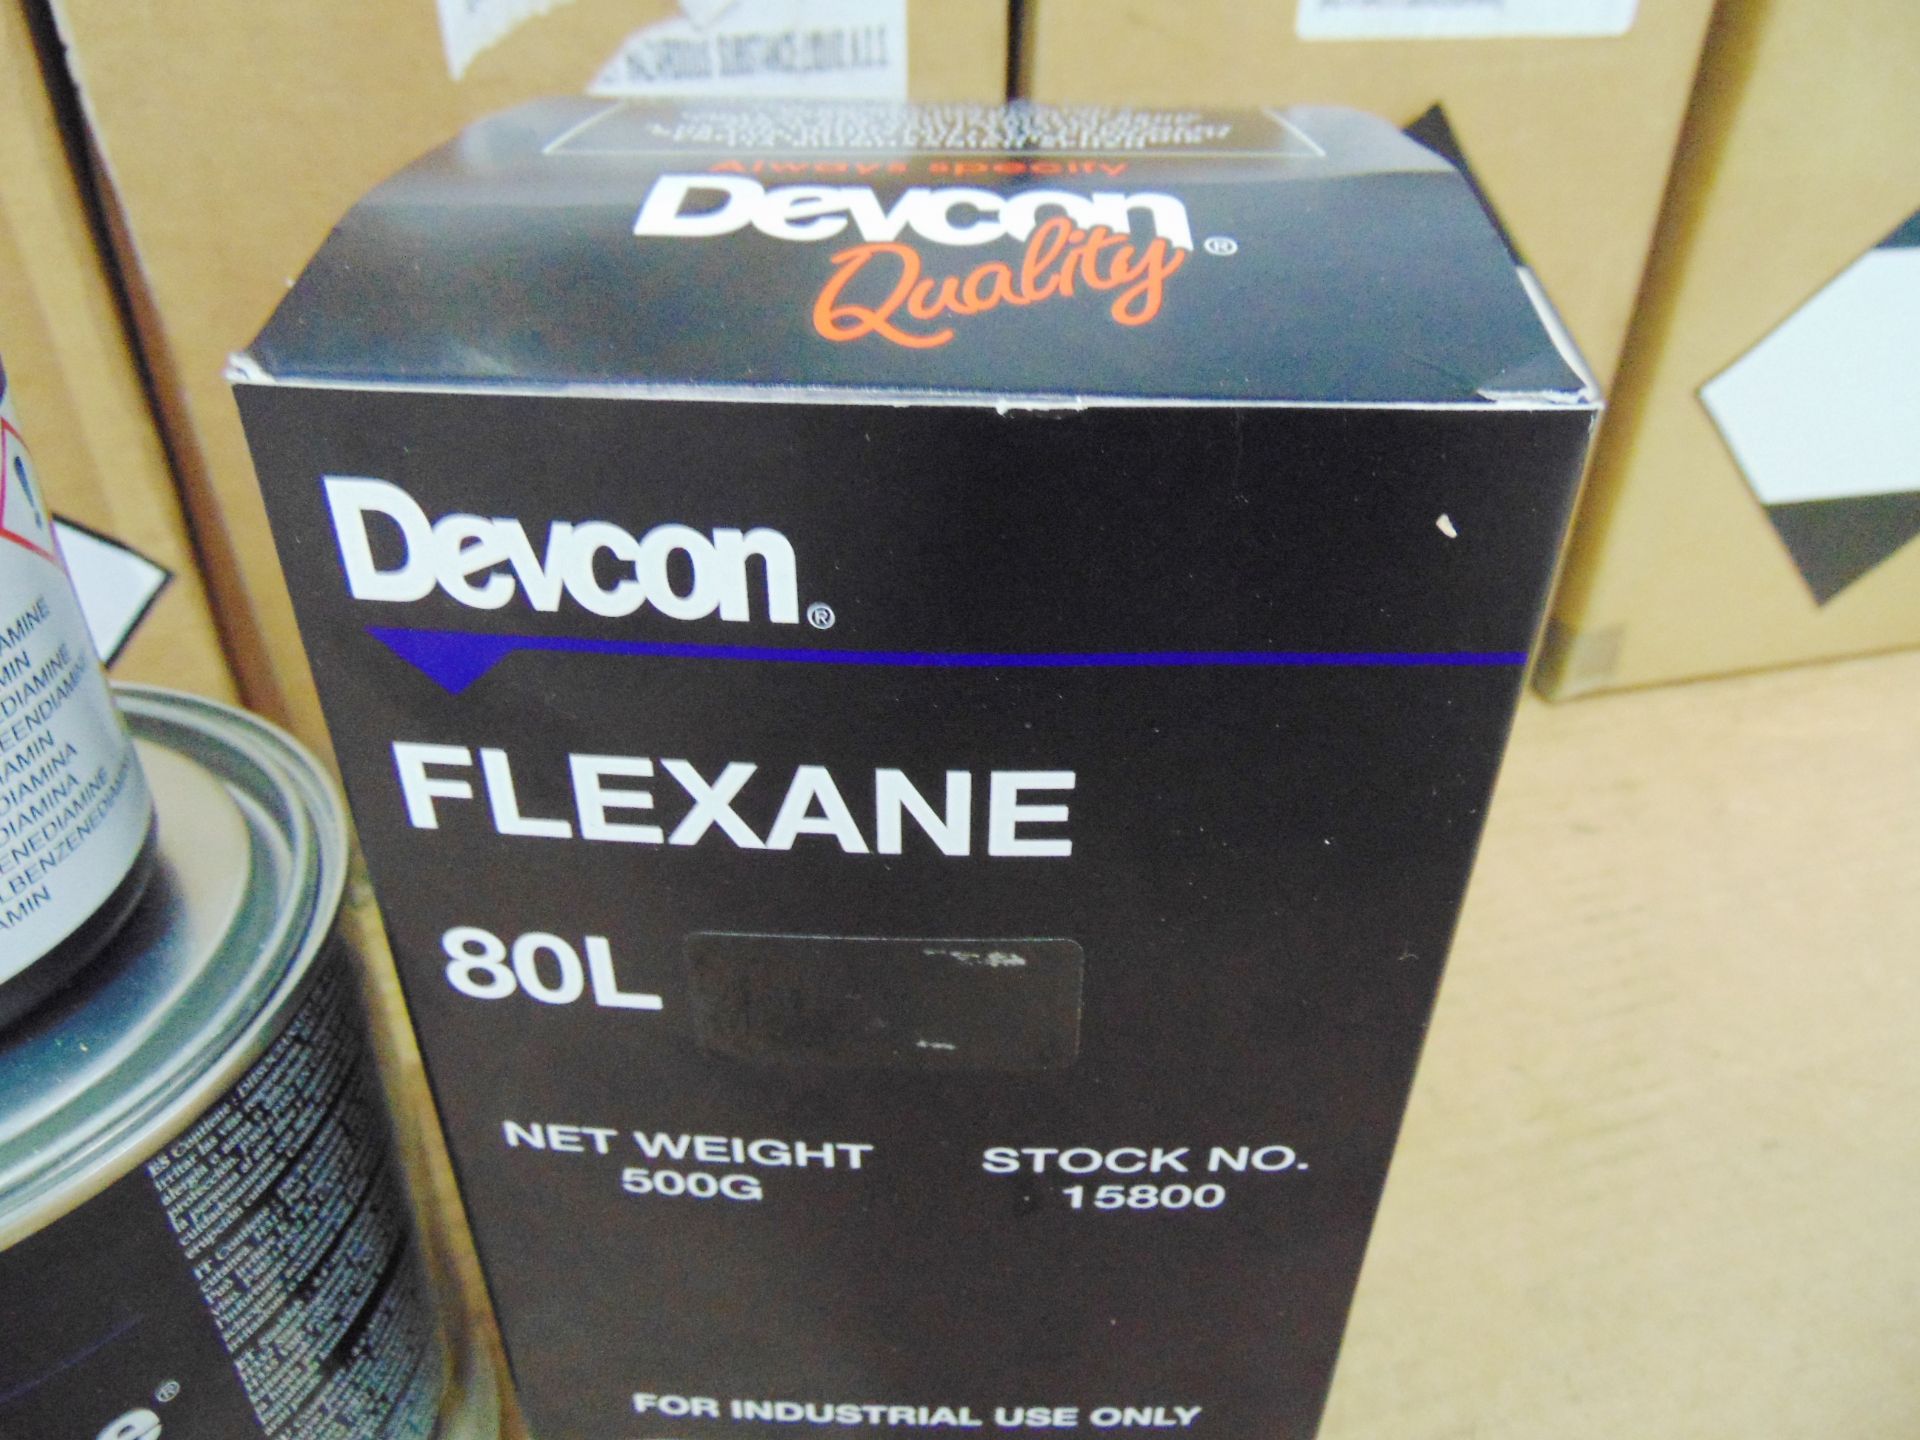 16 x Unissued Devcon Flexane 80L Rubber Repair Kits - Image 3 of 4